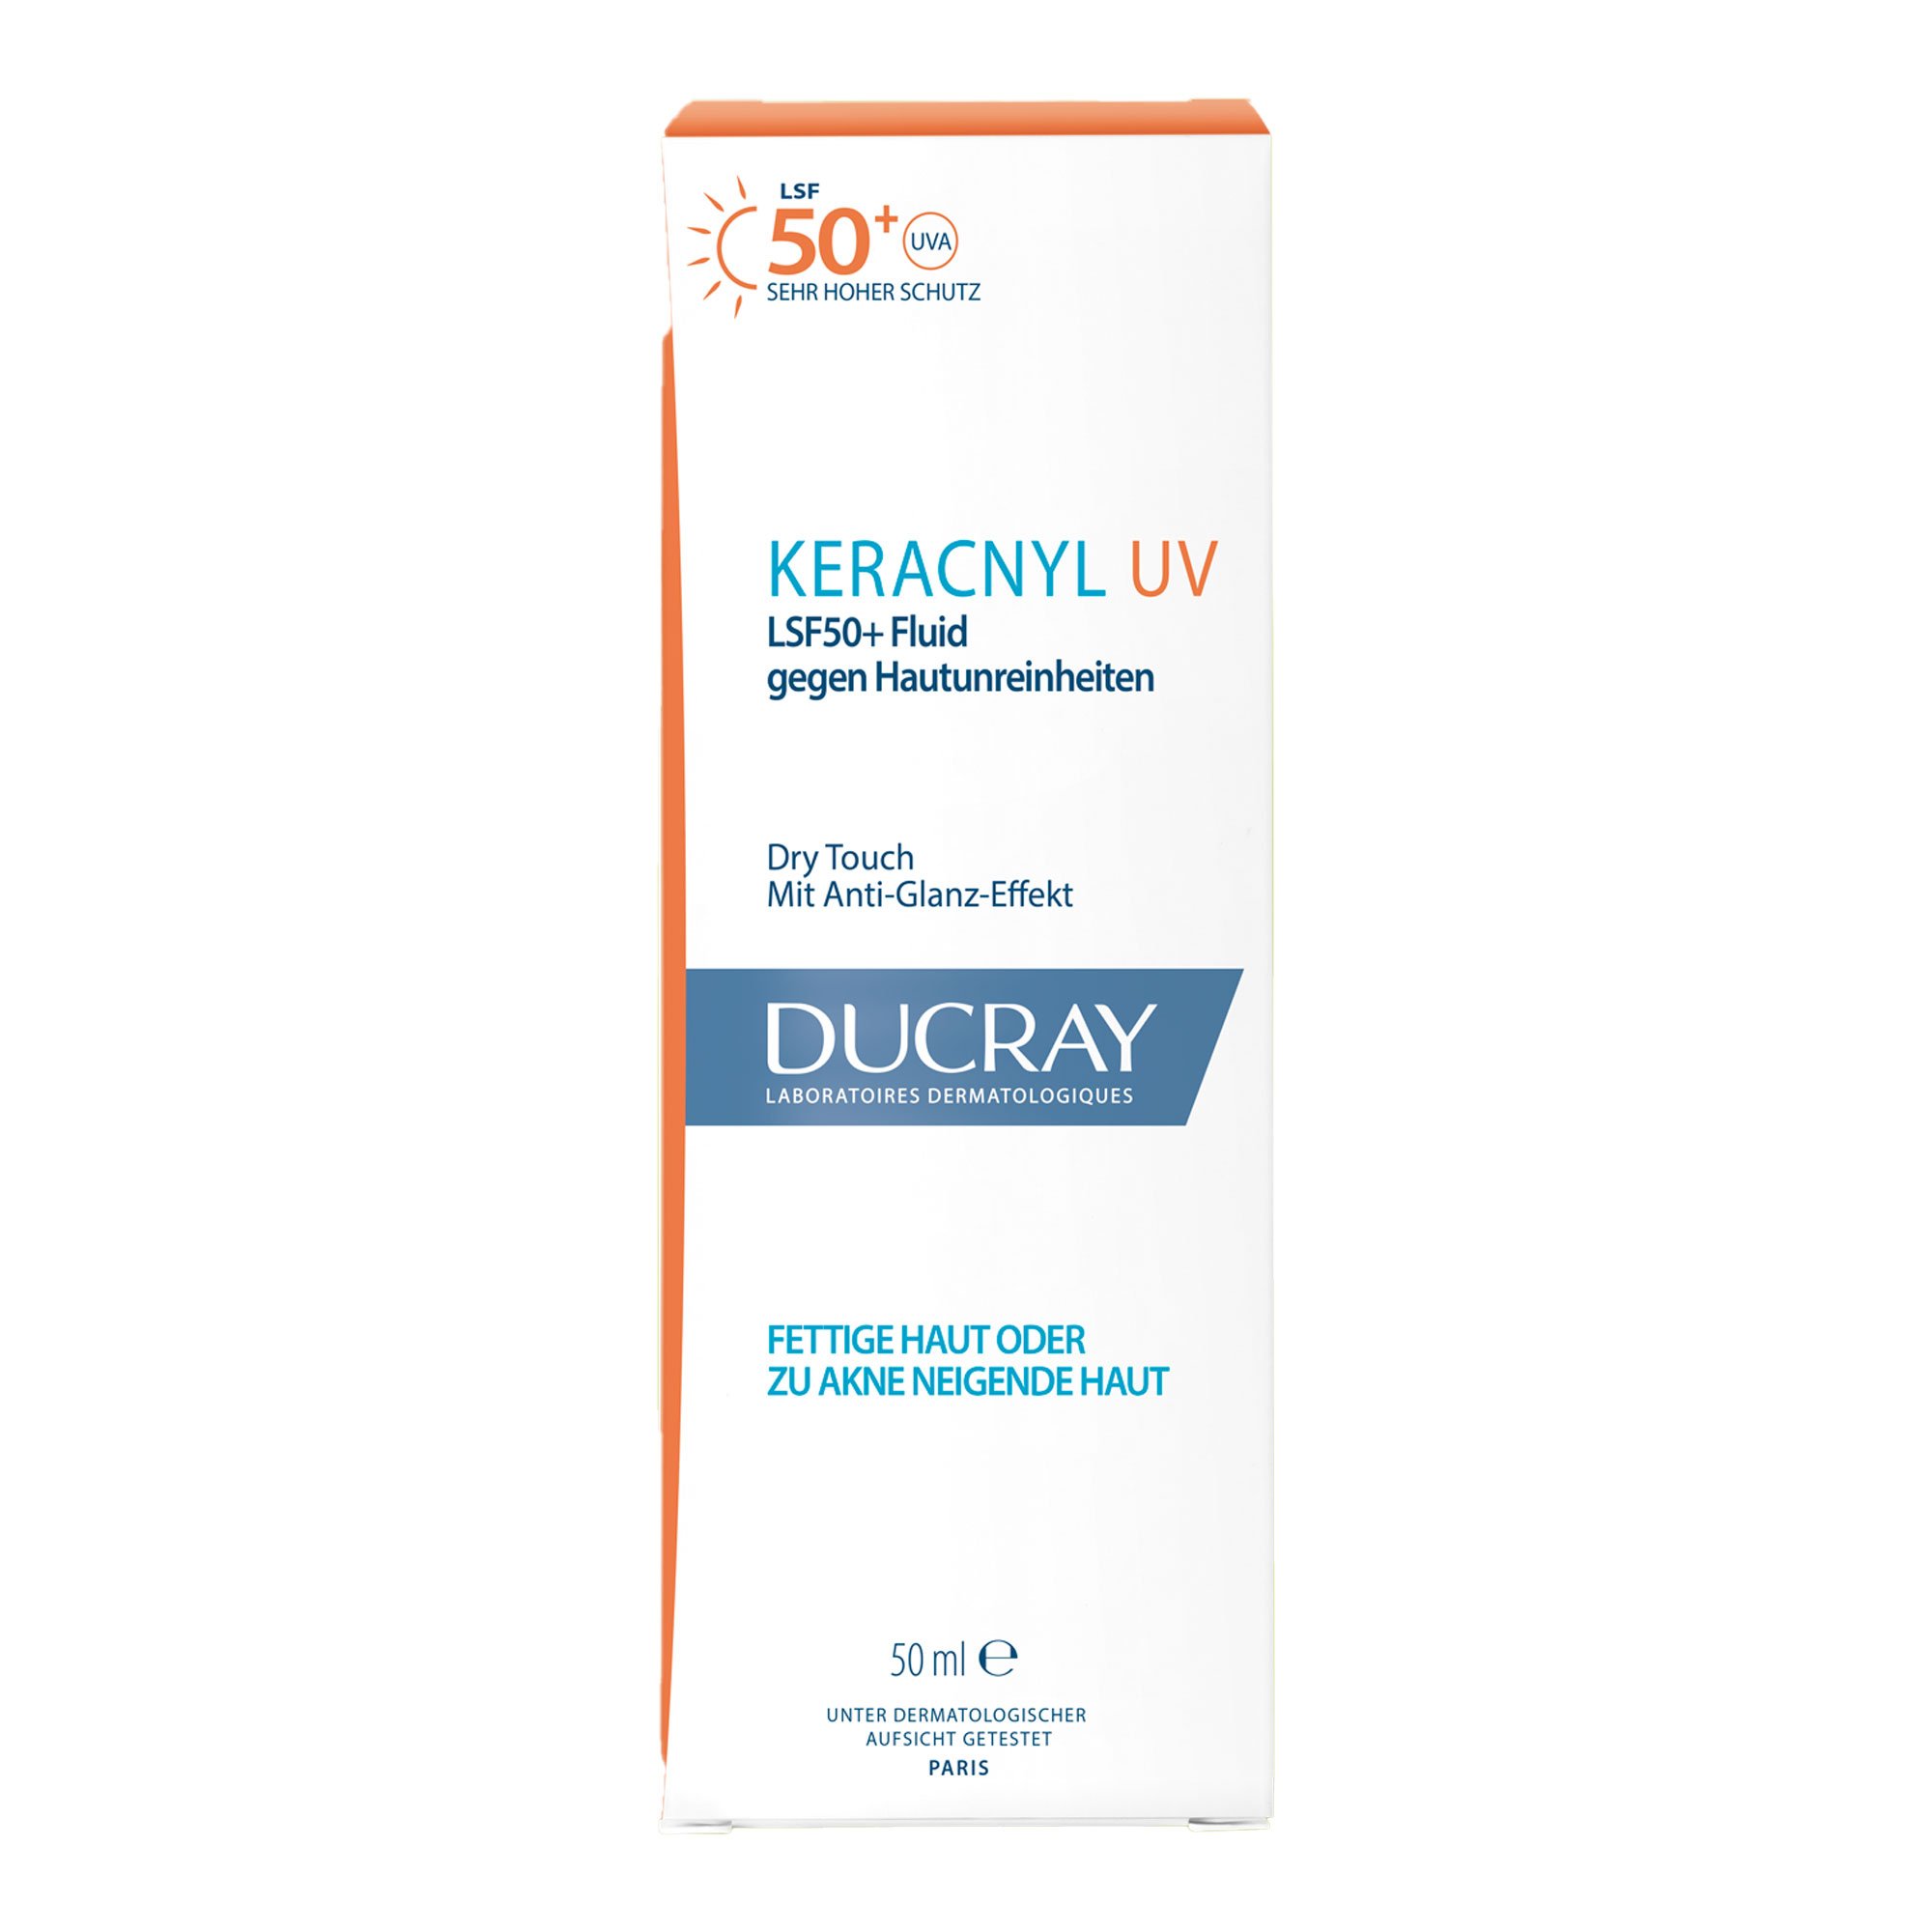 Ducray Keracnyl UV Fluid LSF50+ Umverpackung